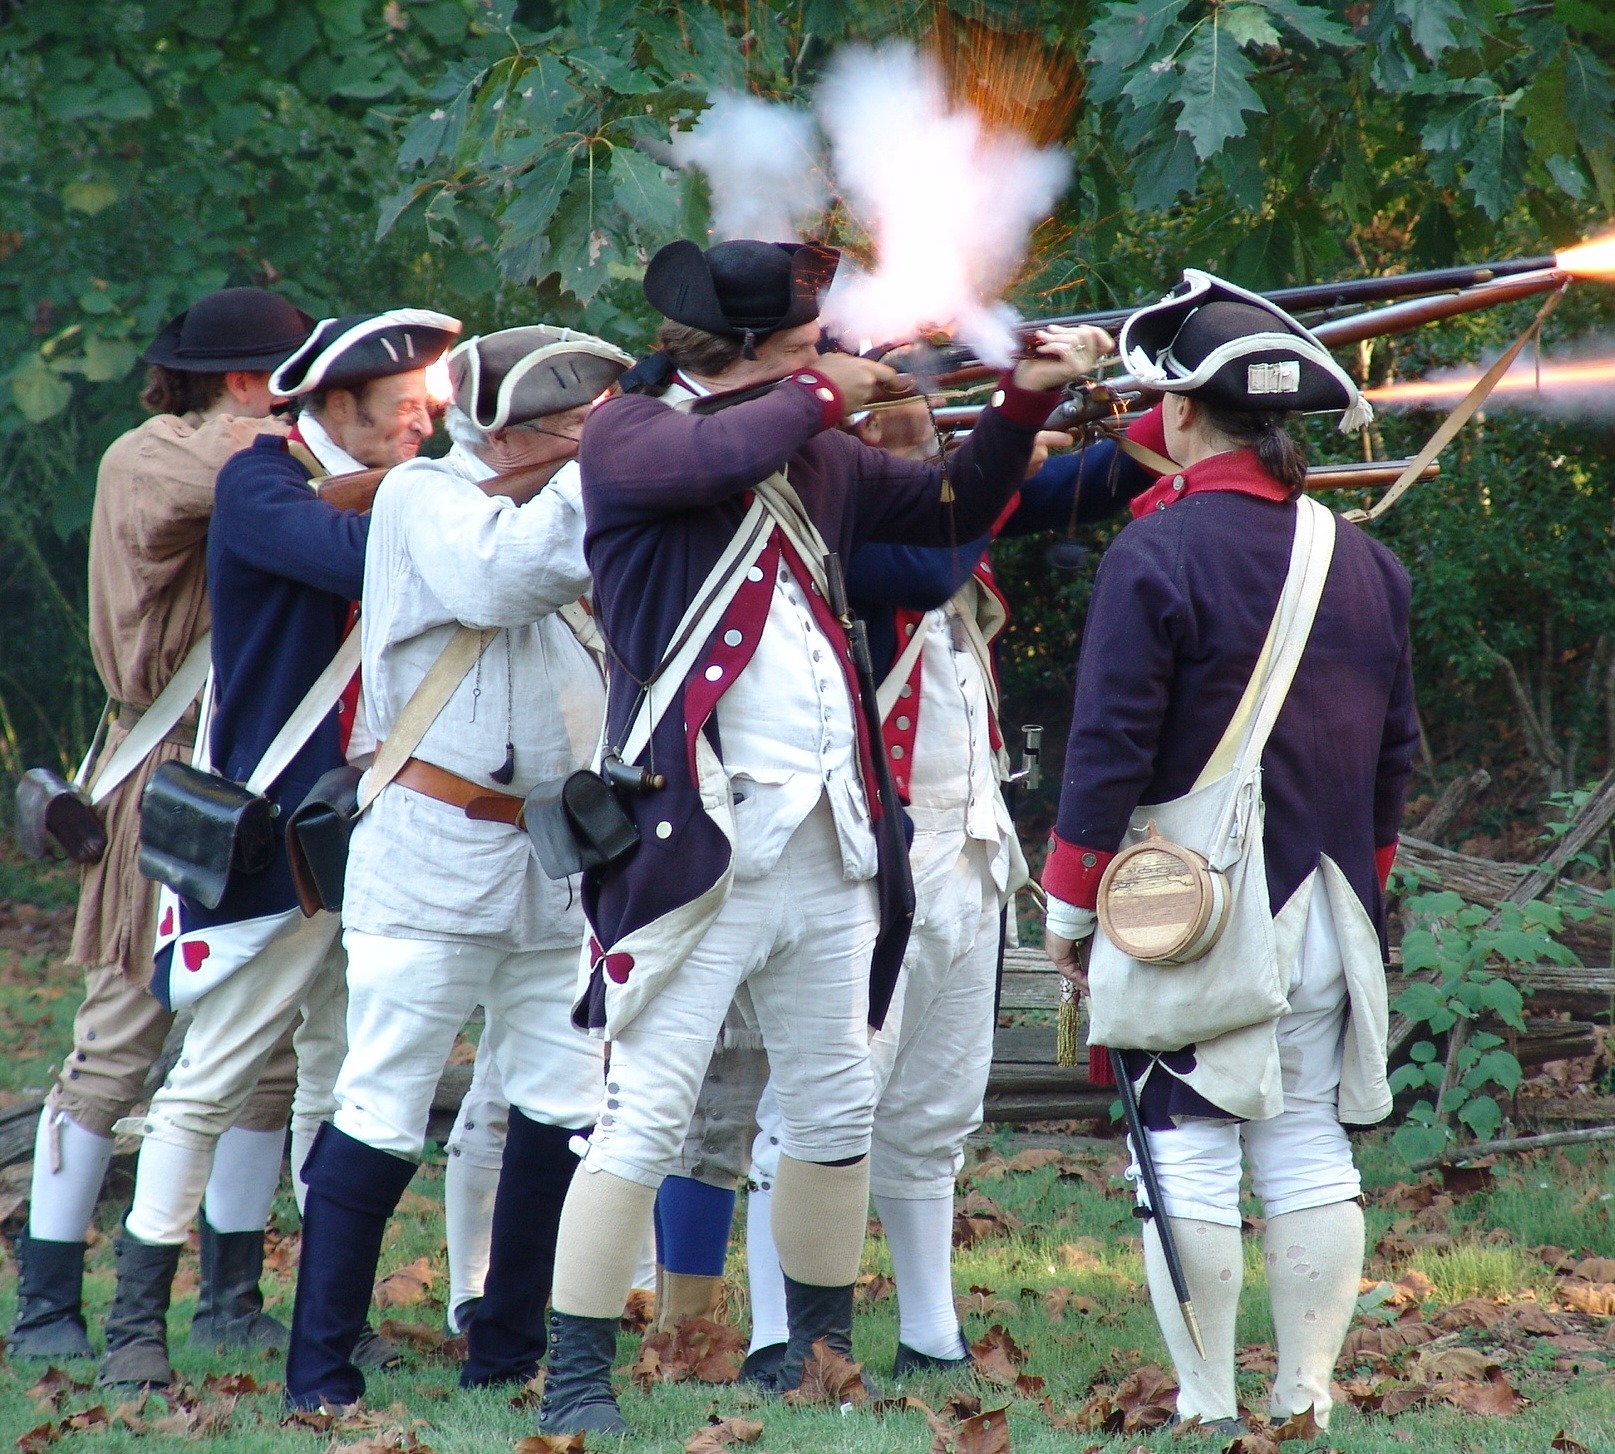 American soldiers firing